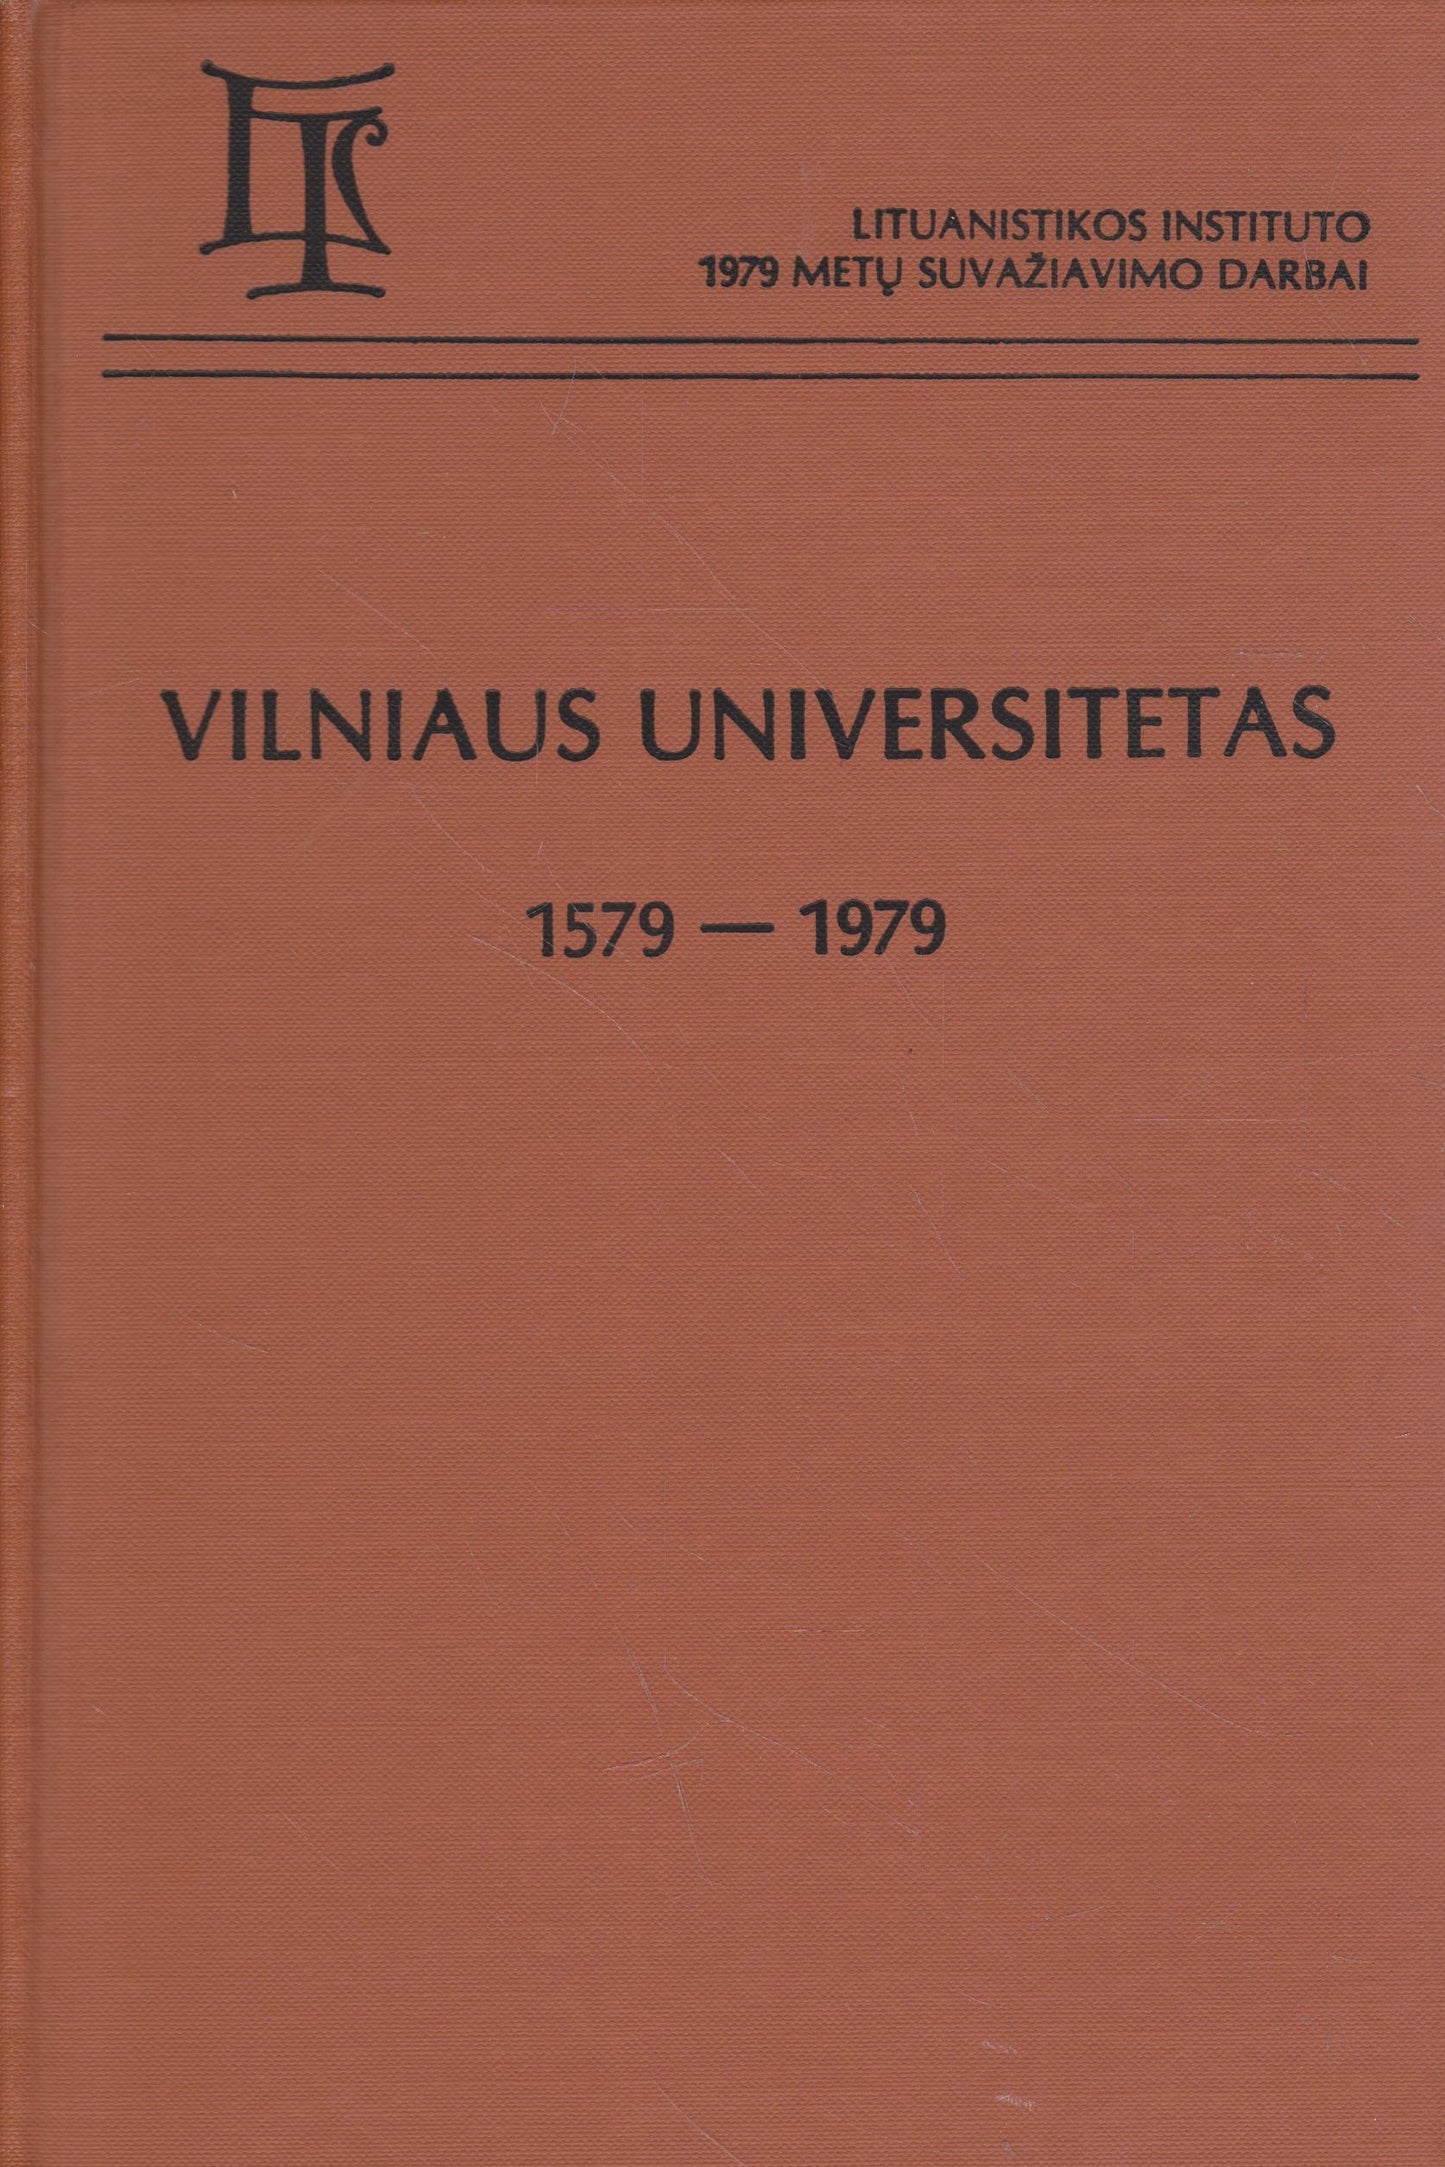 Vilniaus Universitetas, 1579-1979, Chicago